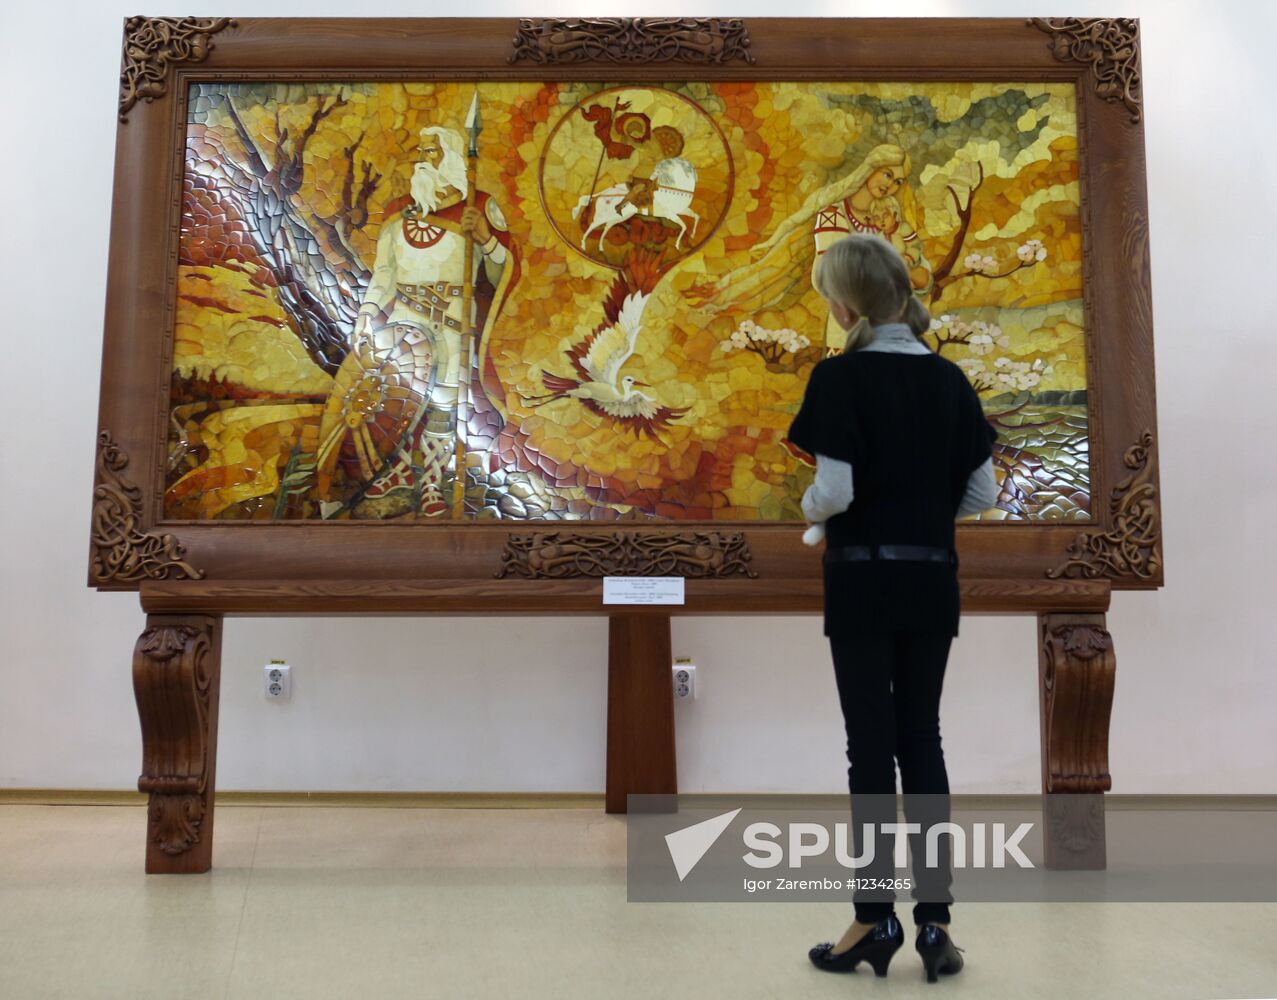 World's largest amber panel showcased in Kaliningrad